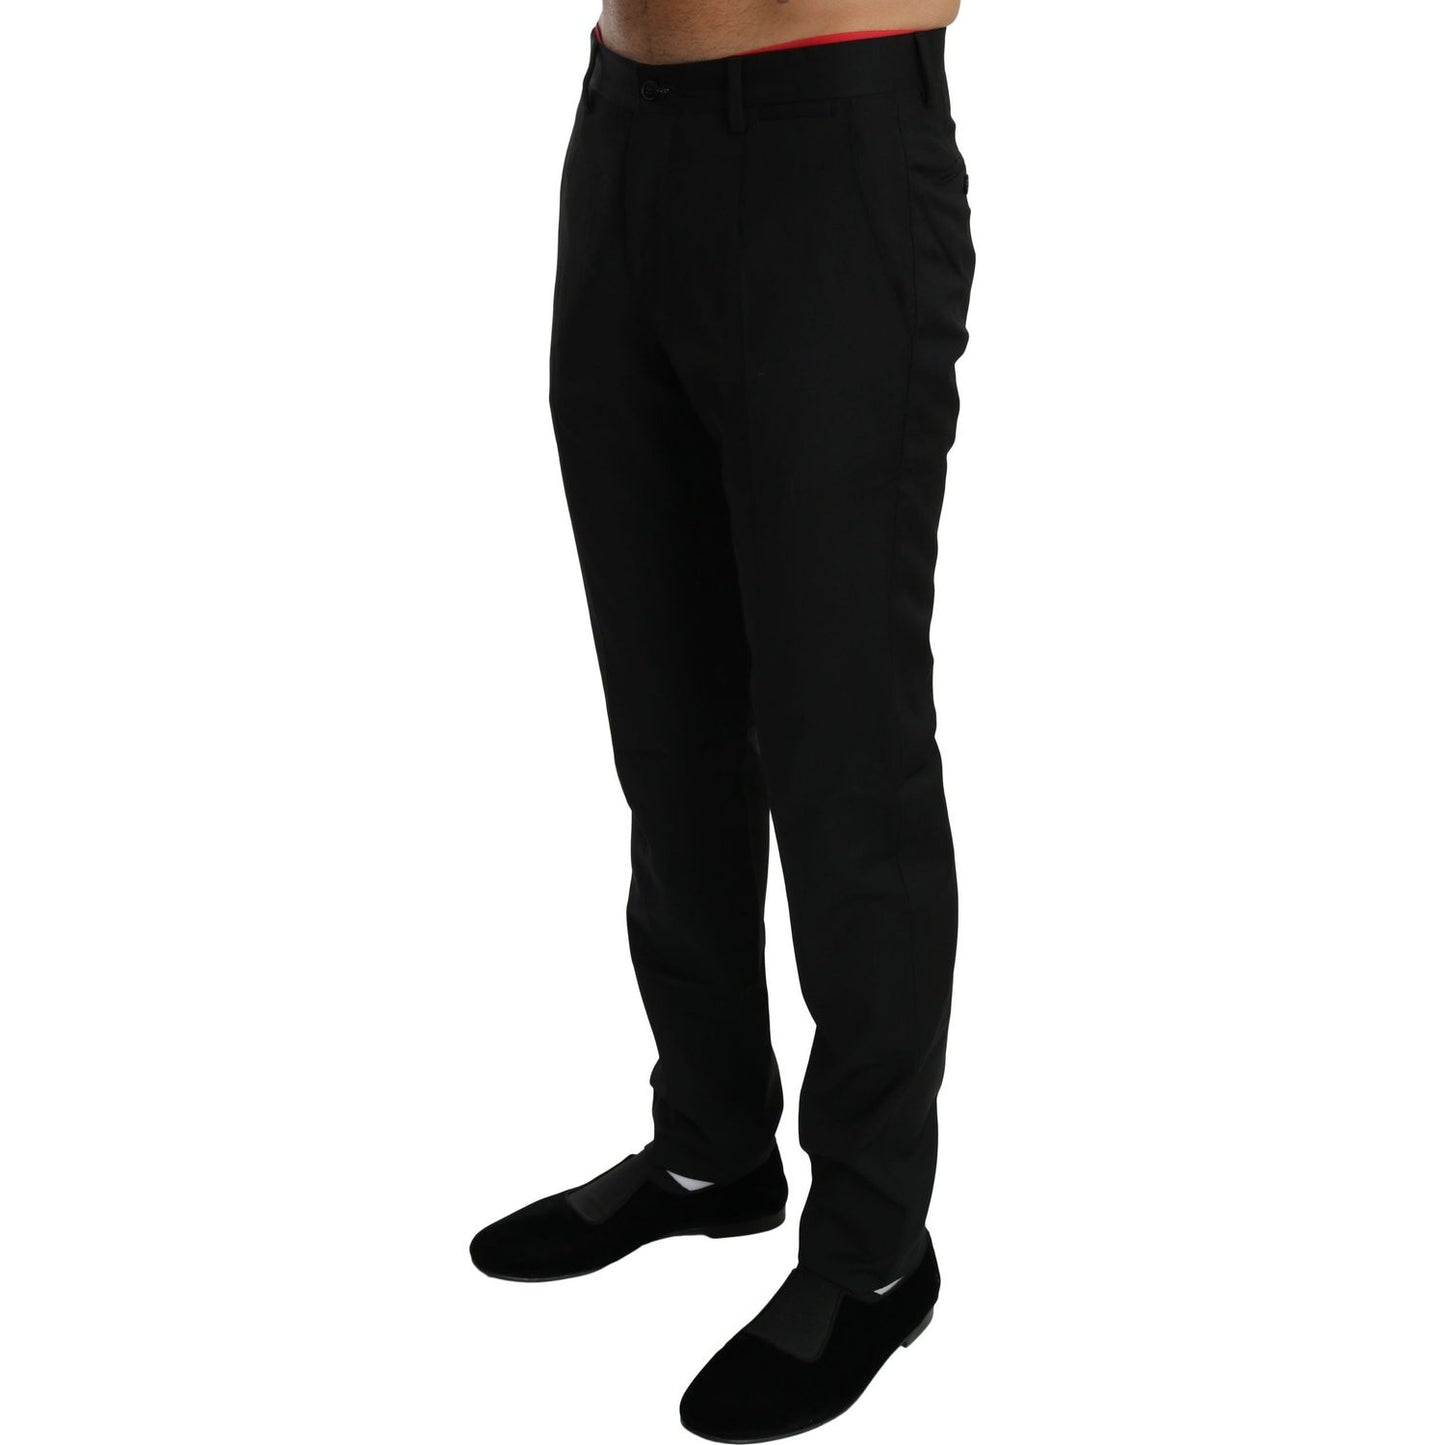 Dolce & Gabbana Elegant Black Wool Dress Pants black-dress-formal-trouser-mens-wool-pants Jeans & Pants IMG_1238-1-scaled-c5850ef4-45e.jpg